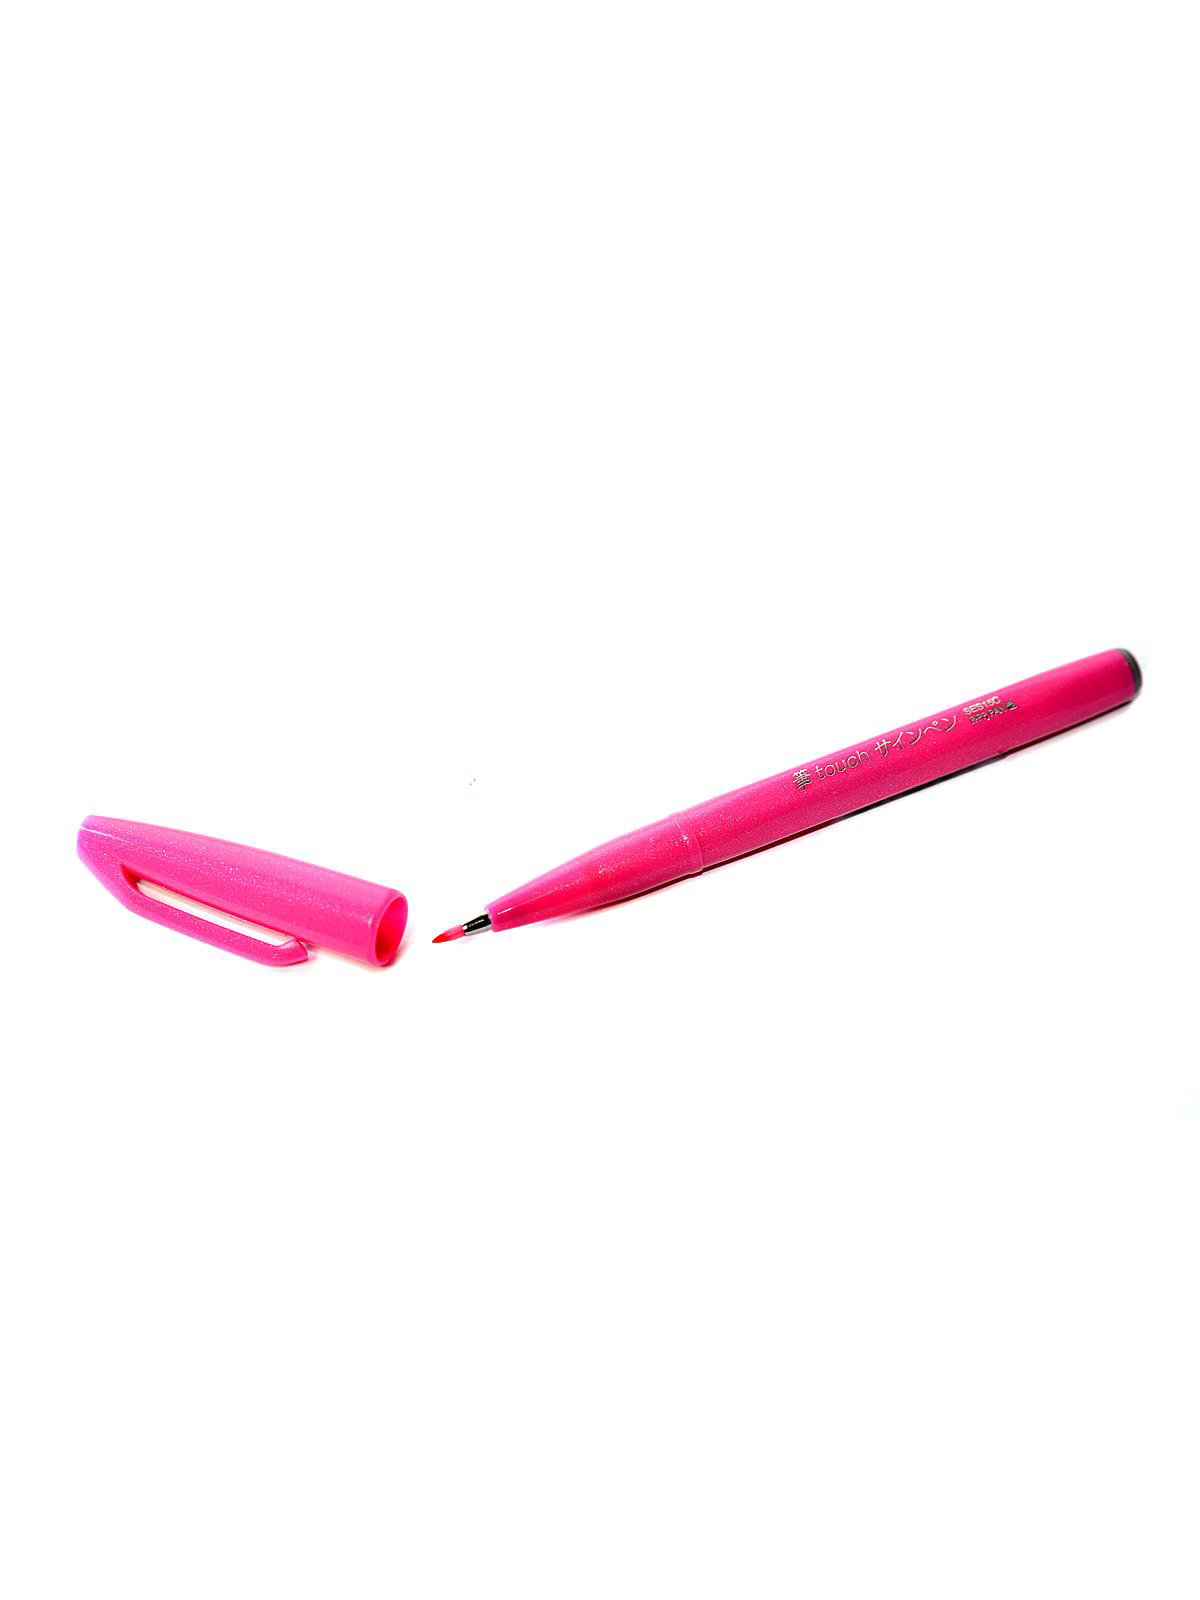 Sign Pen Brush Tip Pink